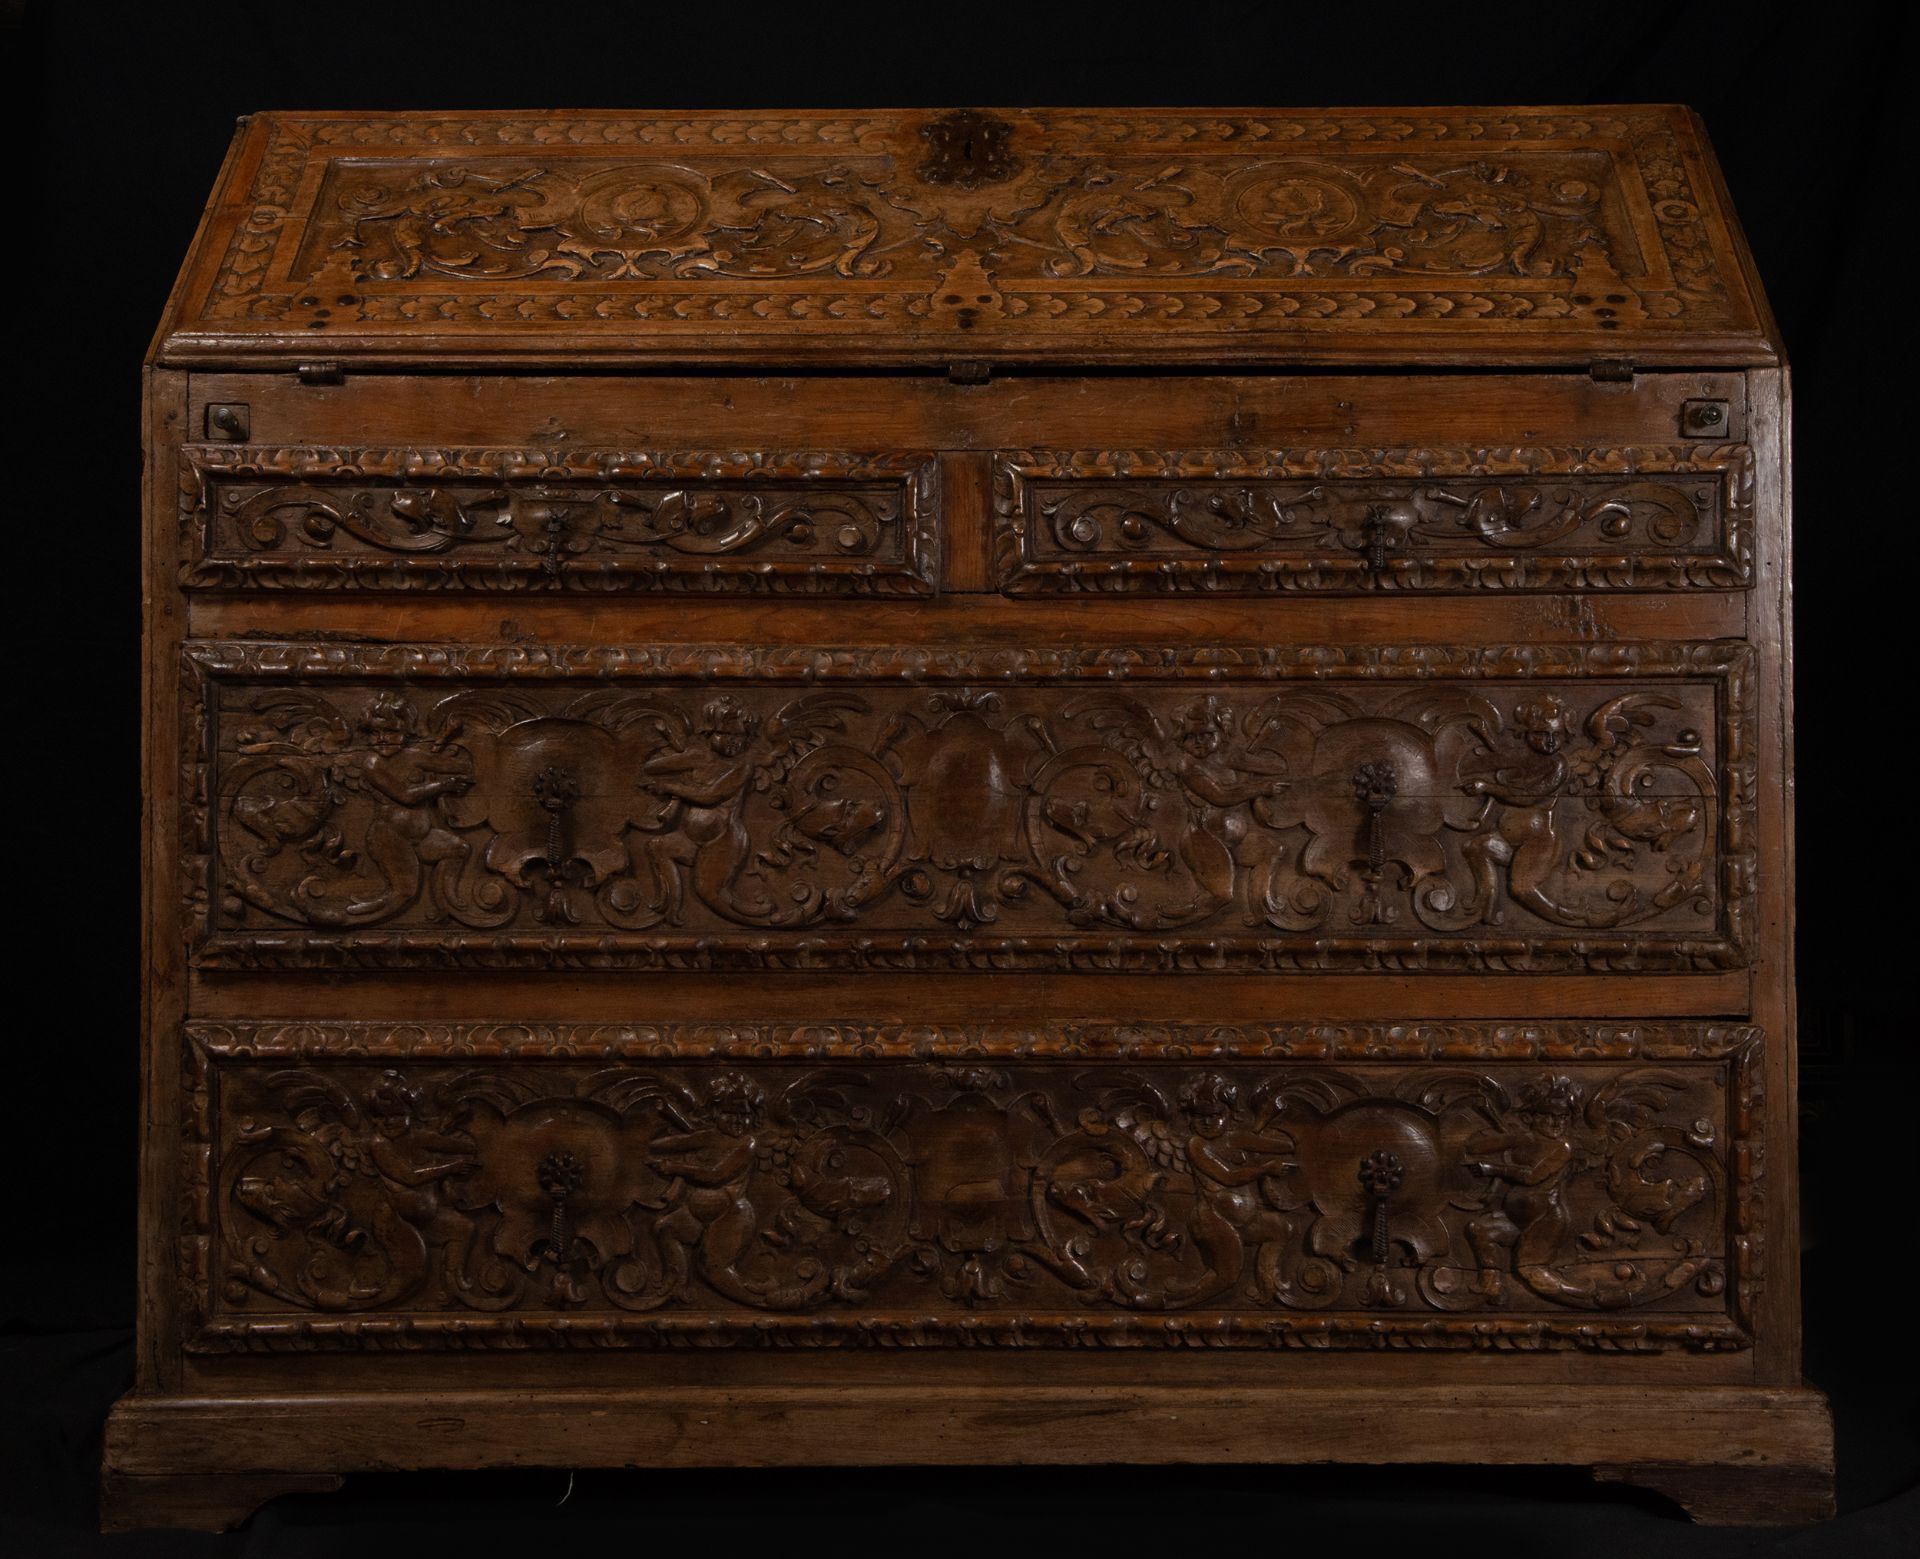 Exceptional Plateresque Desk Cabinet, Spanish Renaissance school of the 16th century